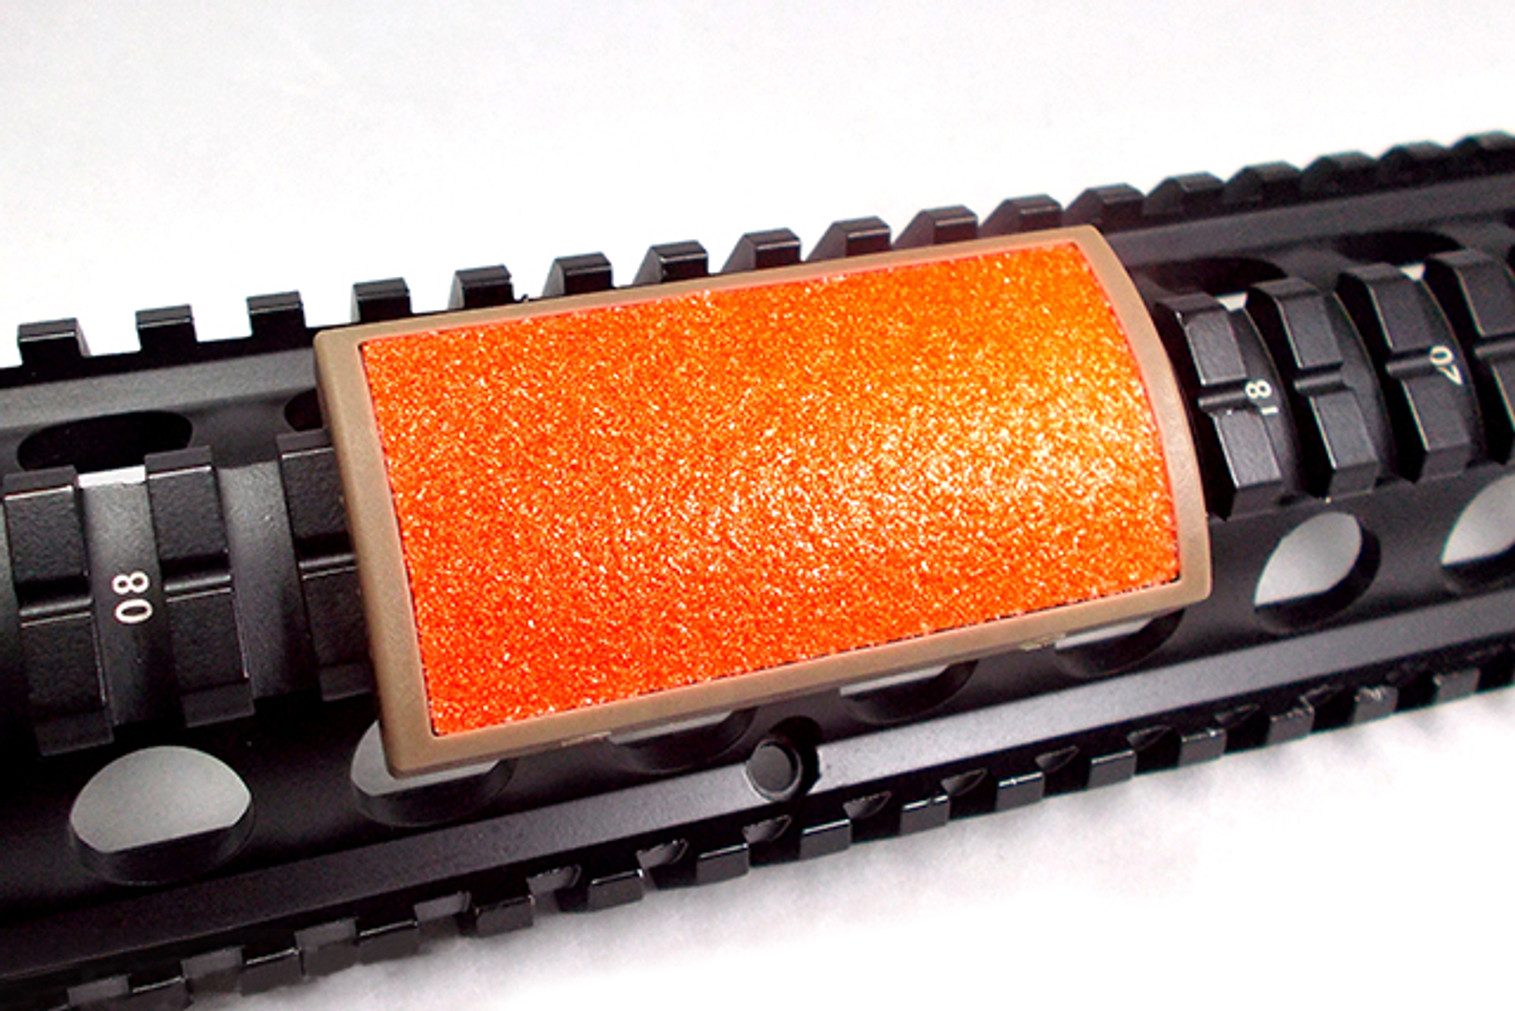 Custom Gun Rails (CGR) Large Laser Engraved Aluminum Rail Cover - Textured Orange Reflective